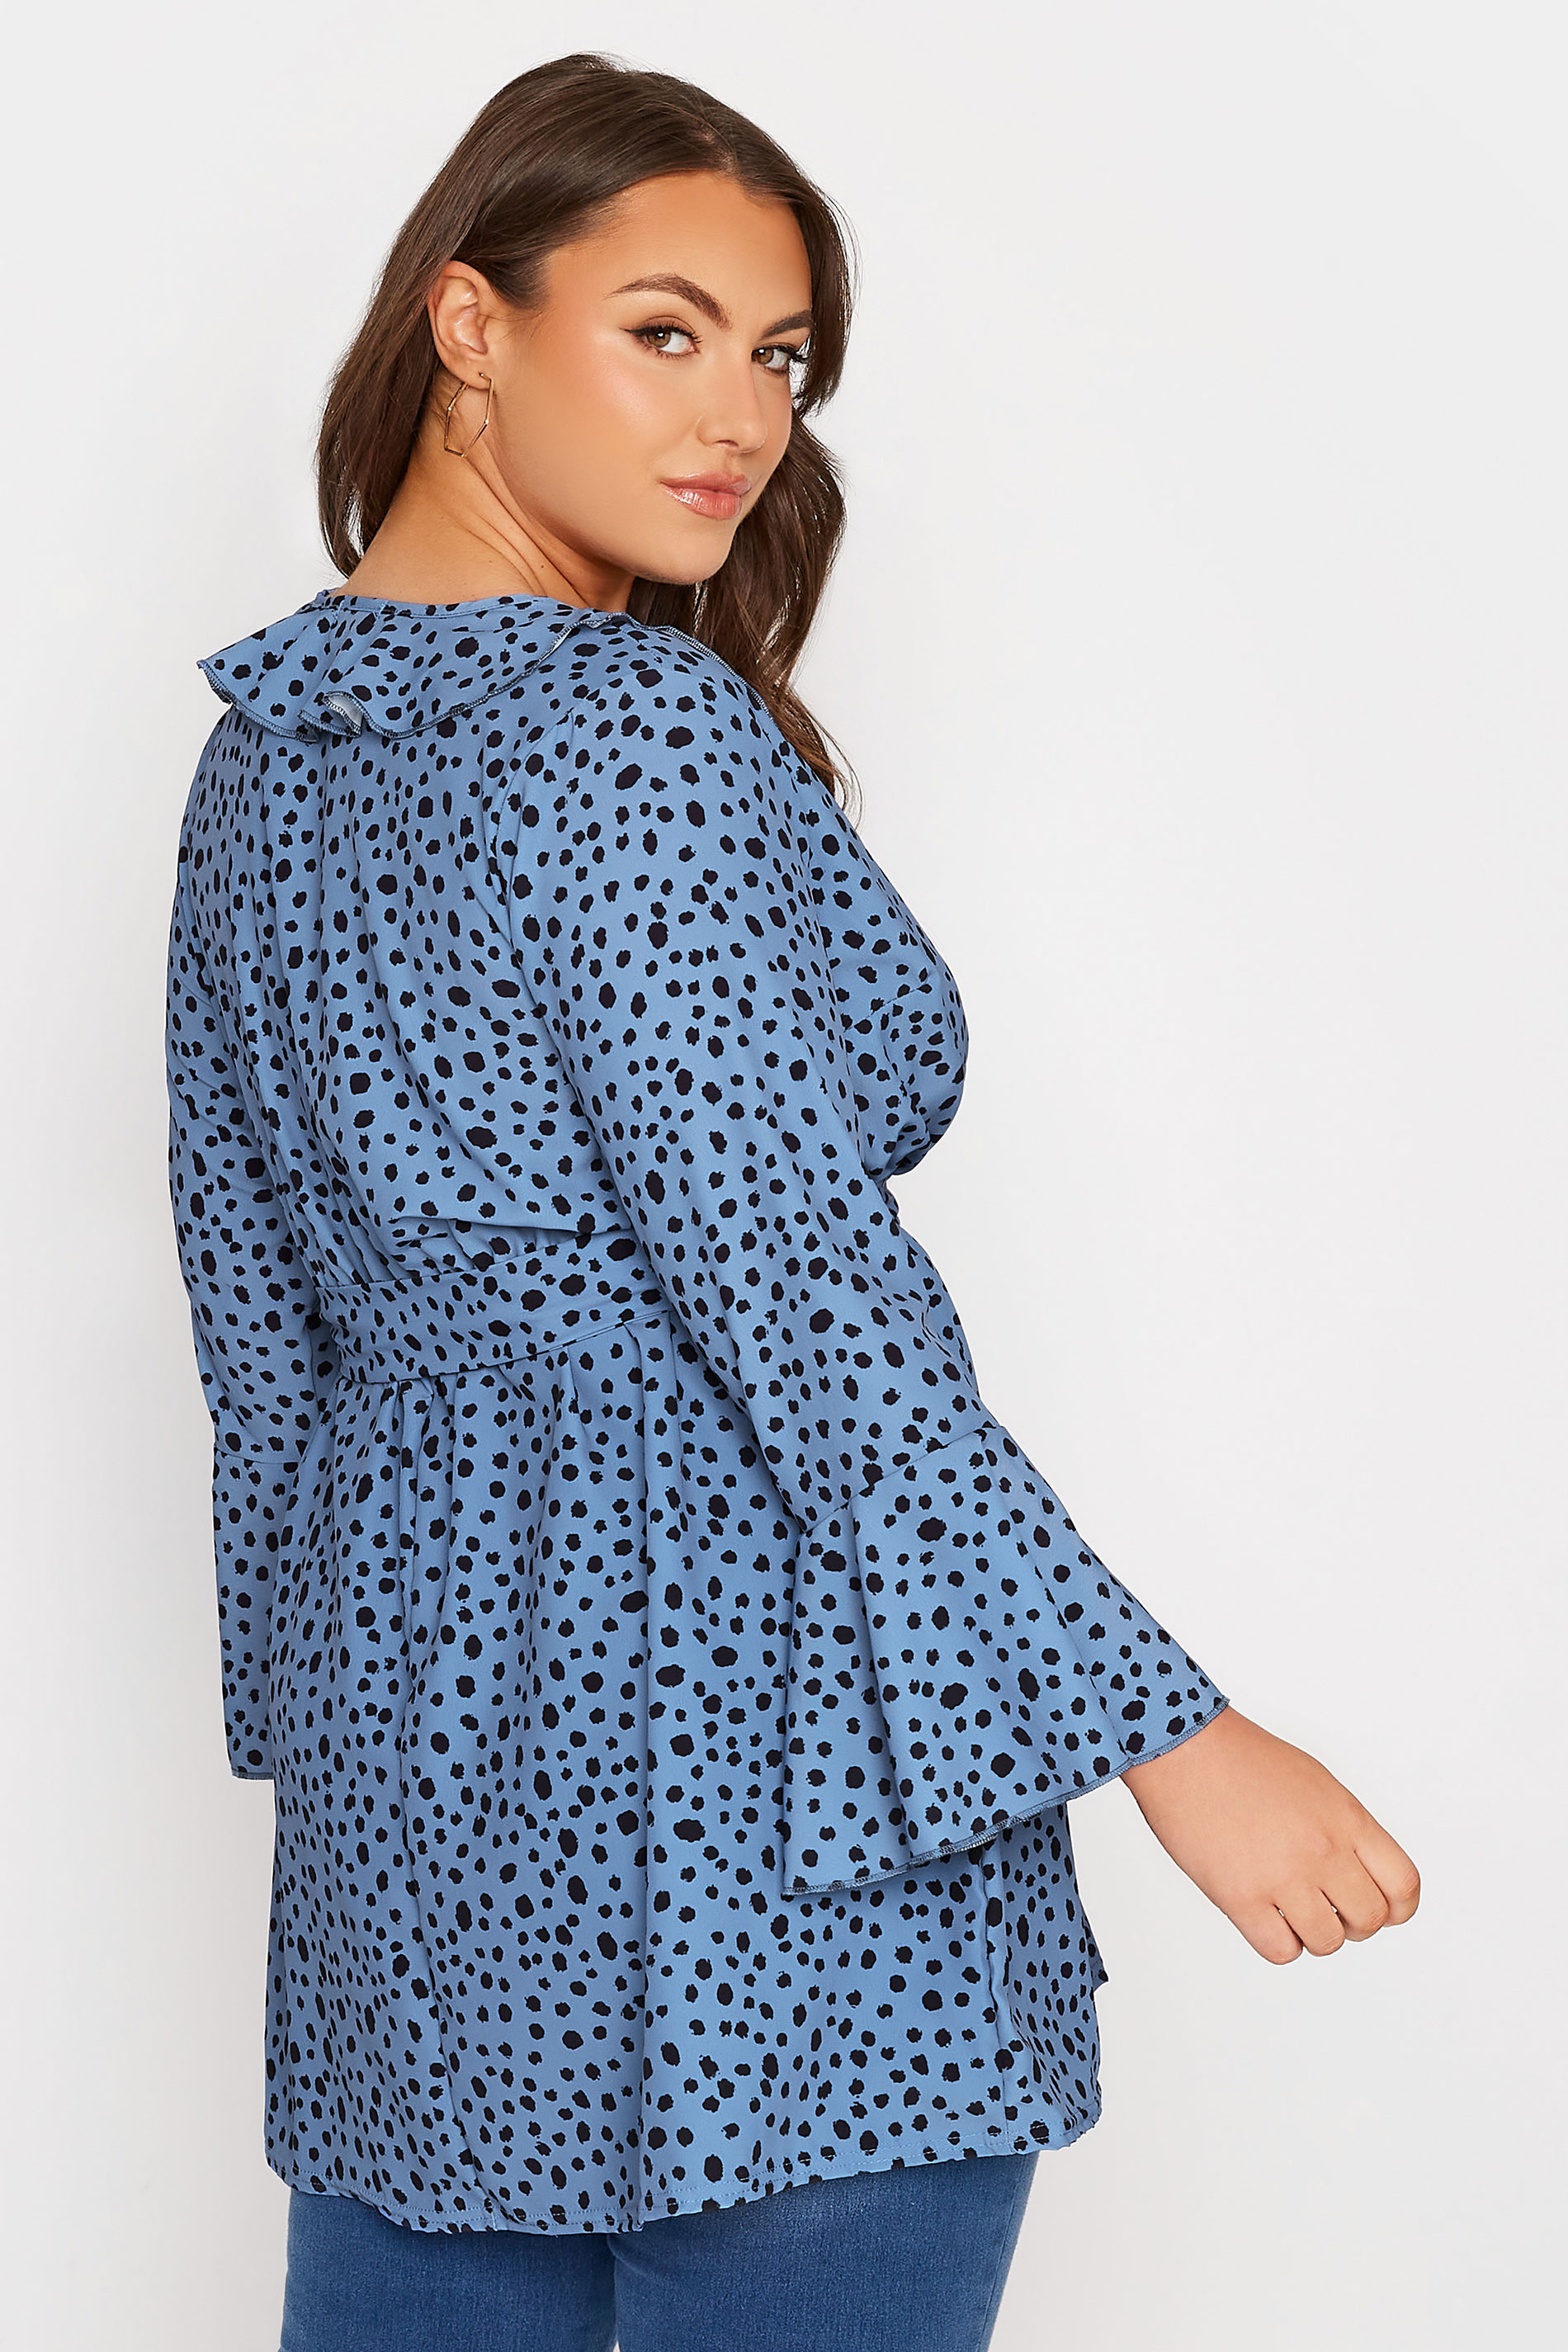 YOURS LONDON Plus Size Blue Dalmatian Ruffle Wrap Top | Yours Clothing 3